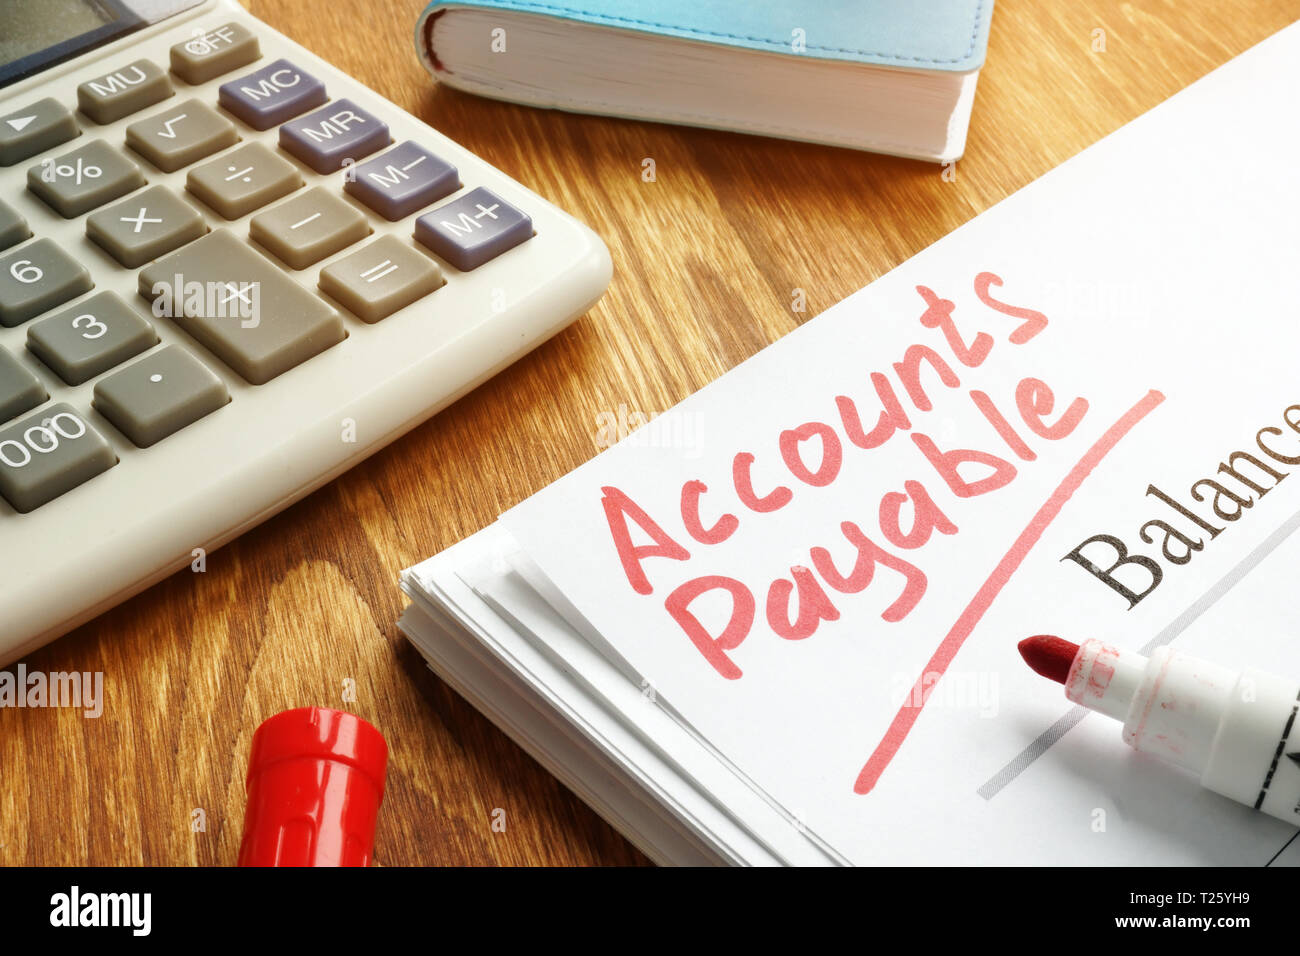 Accounts payable handwritten by marker on balance sheet. Stock Photo